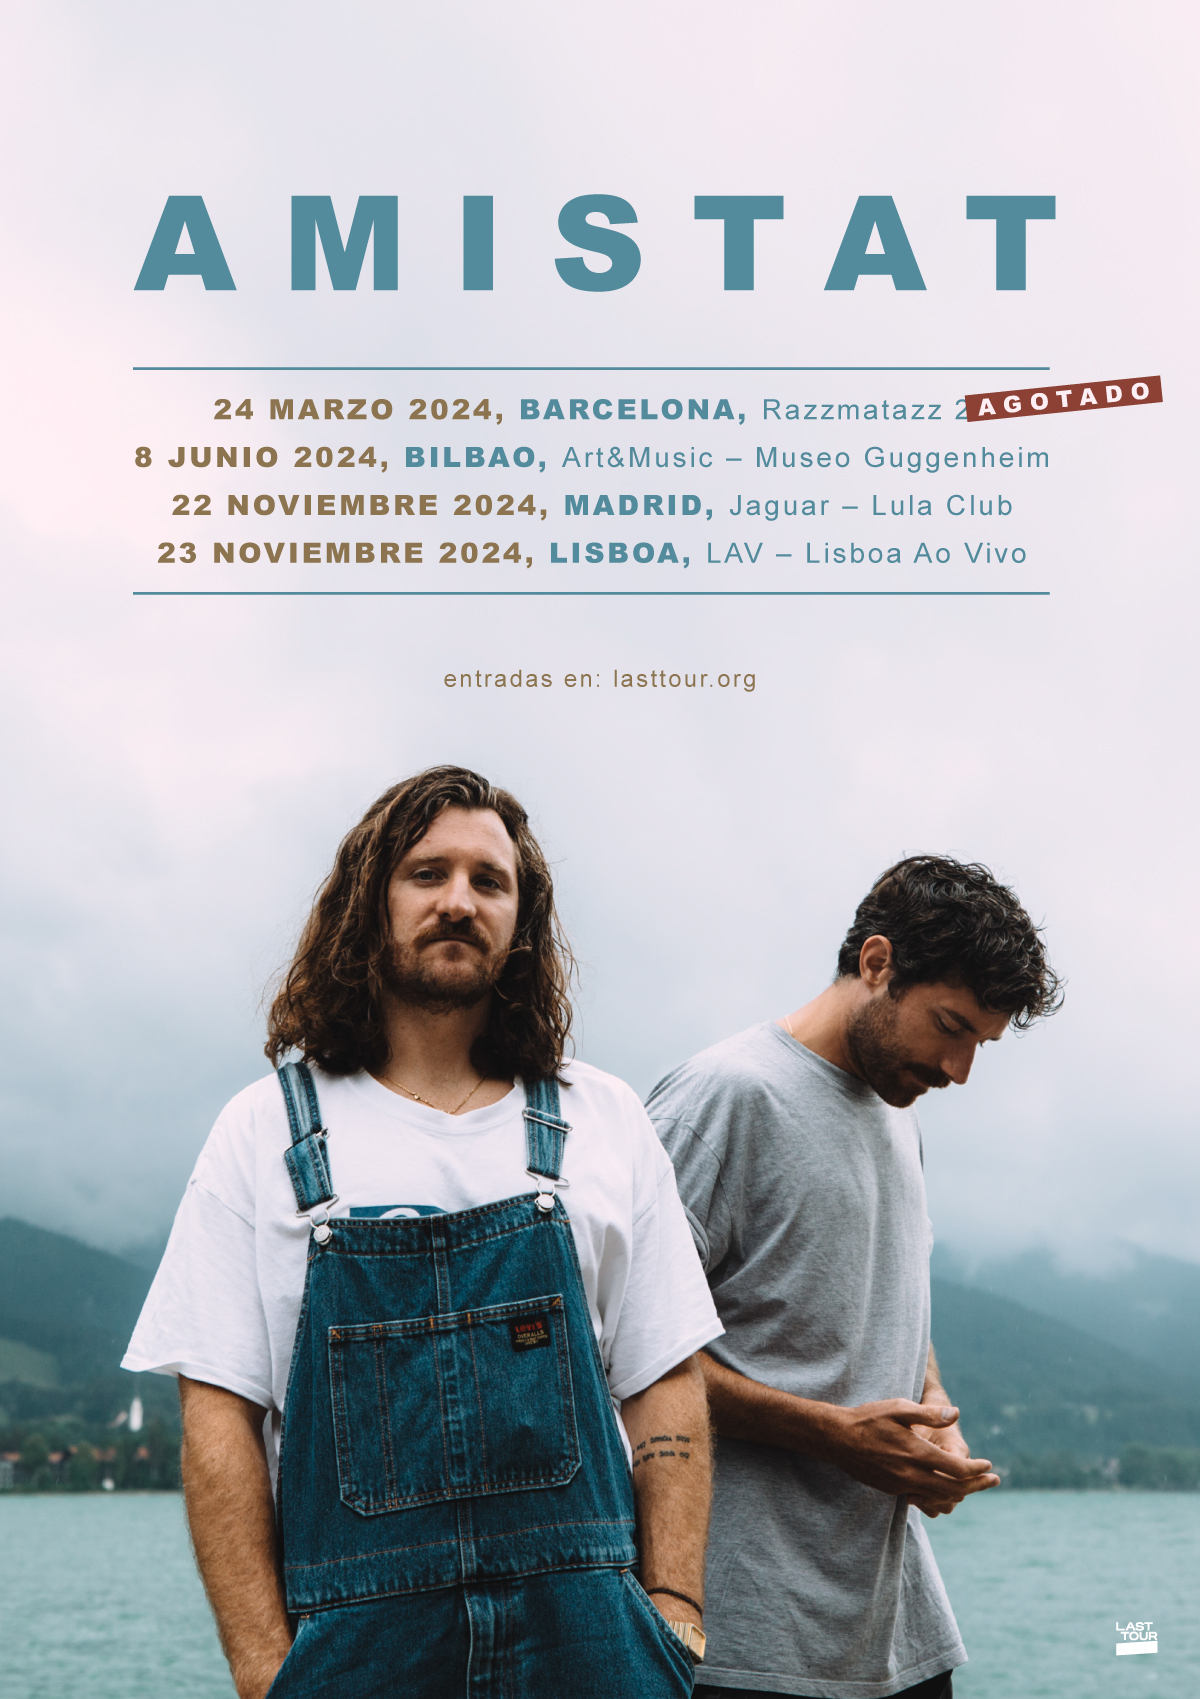 Amistat actuará en Madrid, Barcelona, Lisboa y Bilbao